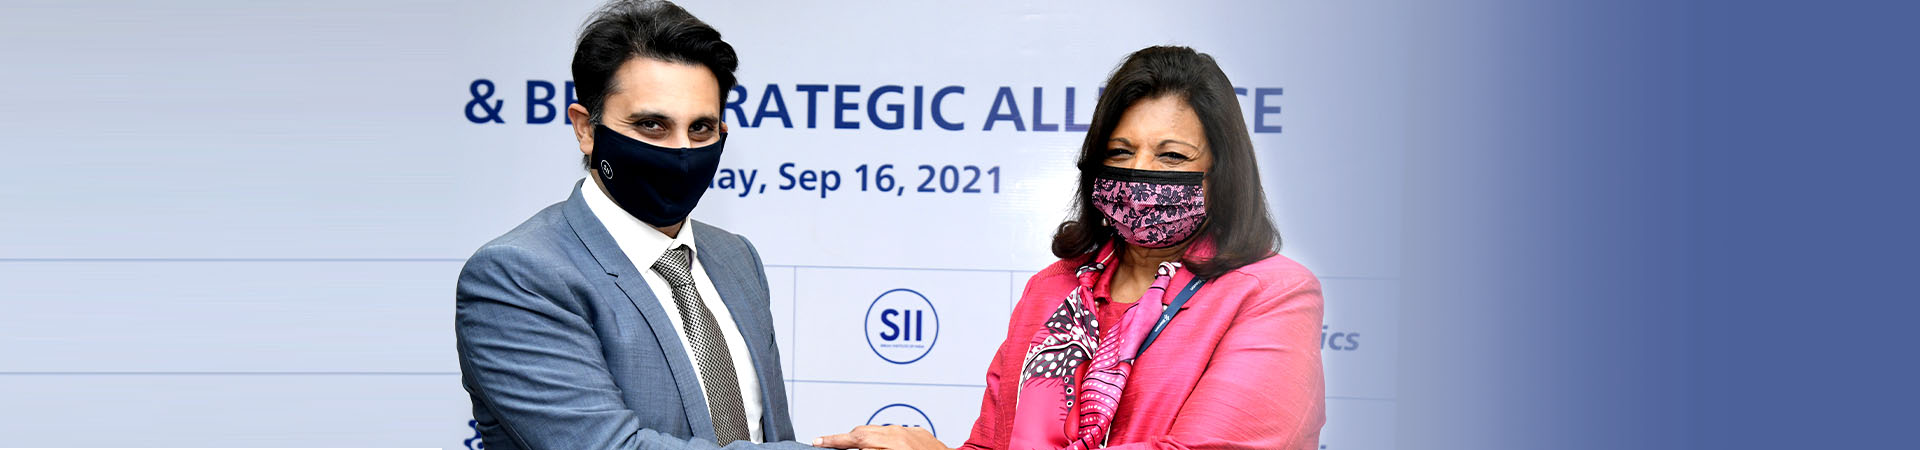 Strategic Alliance with Serum Institute to Impact Global Health